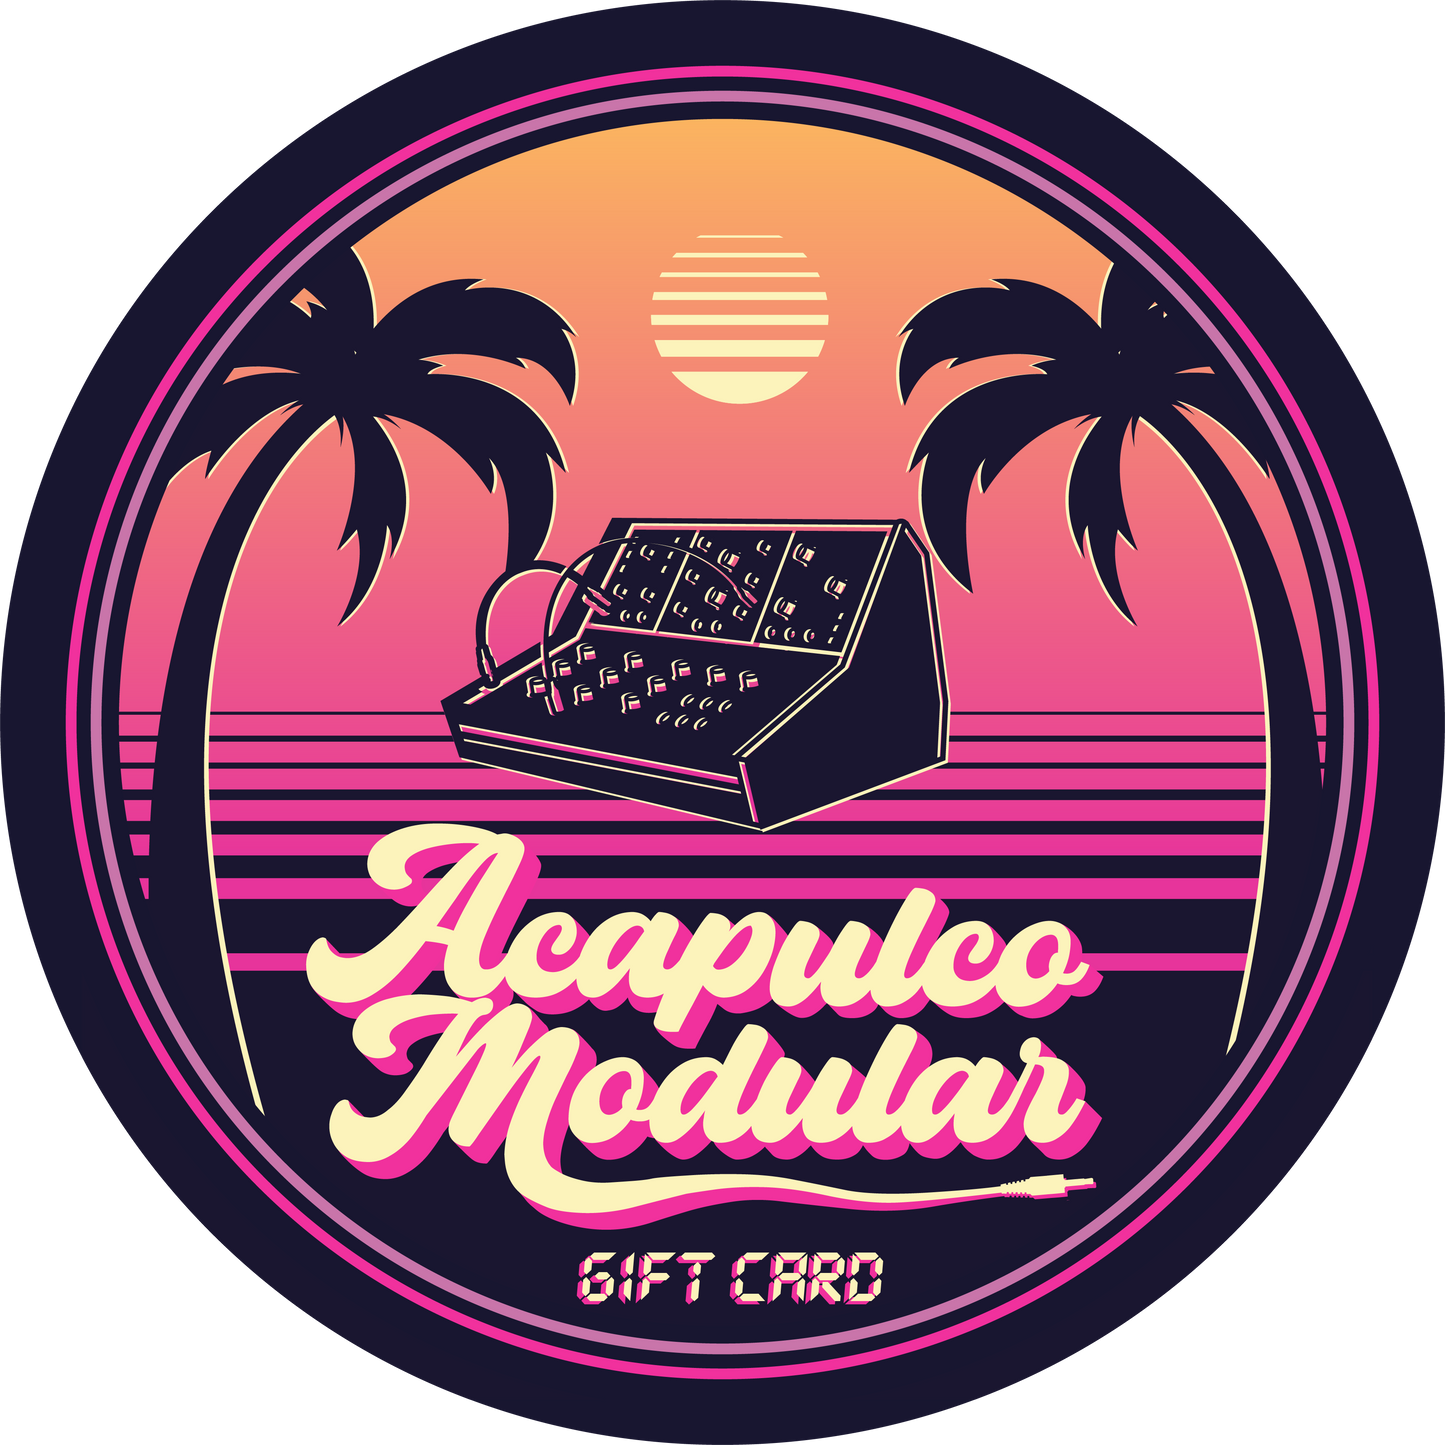 Acapulco Modular Gift Card